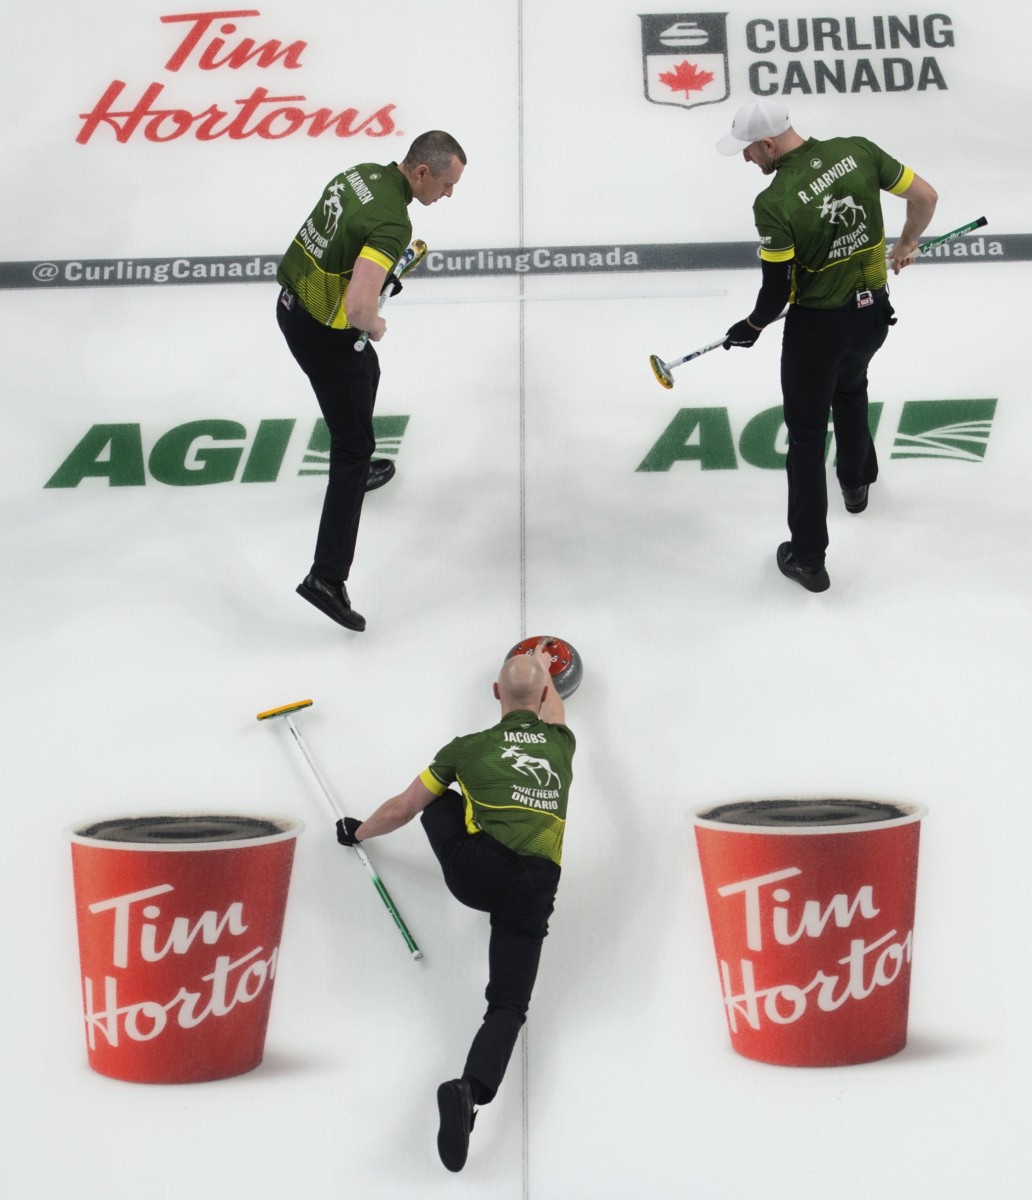 Curlings Iconic Brier Seeks Corporate Home